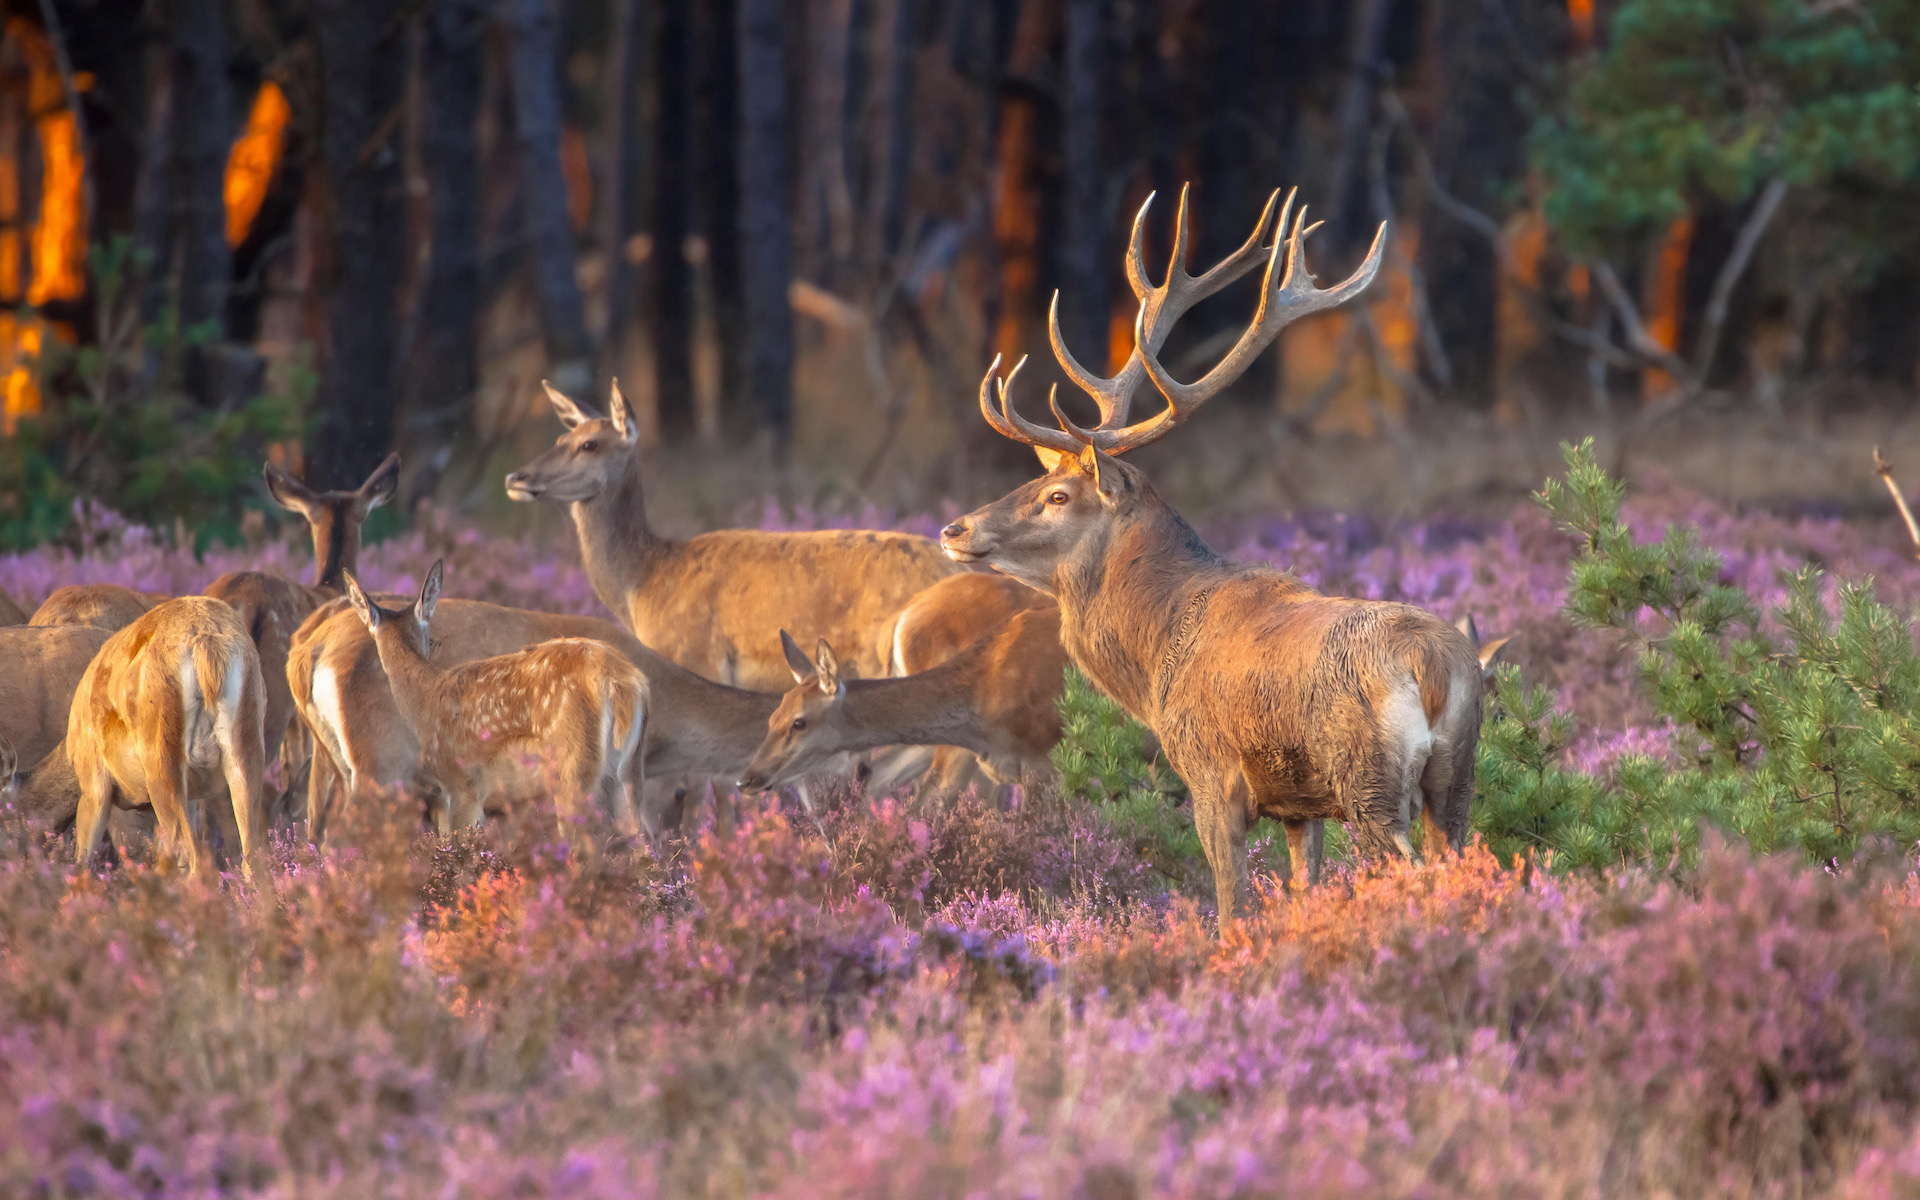 Male red deer (Cervus elaphus) guarding his flock of deer during mating season on the Hoge Veluwe, Netherlands